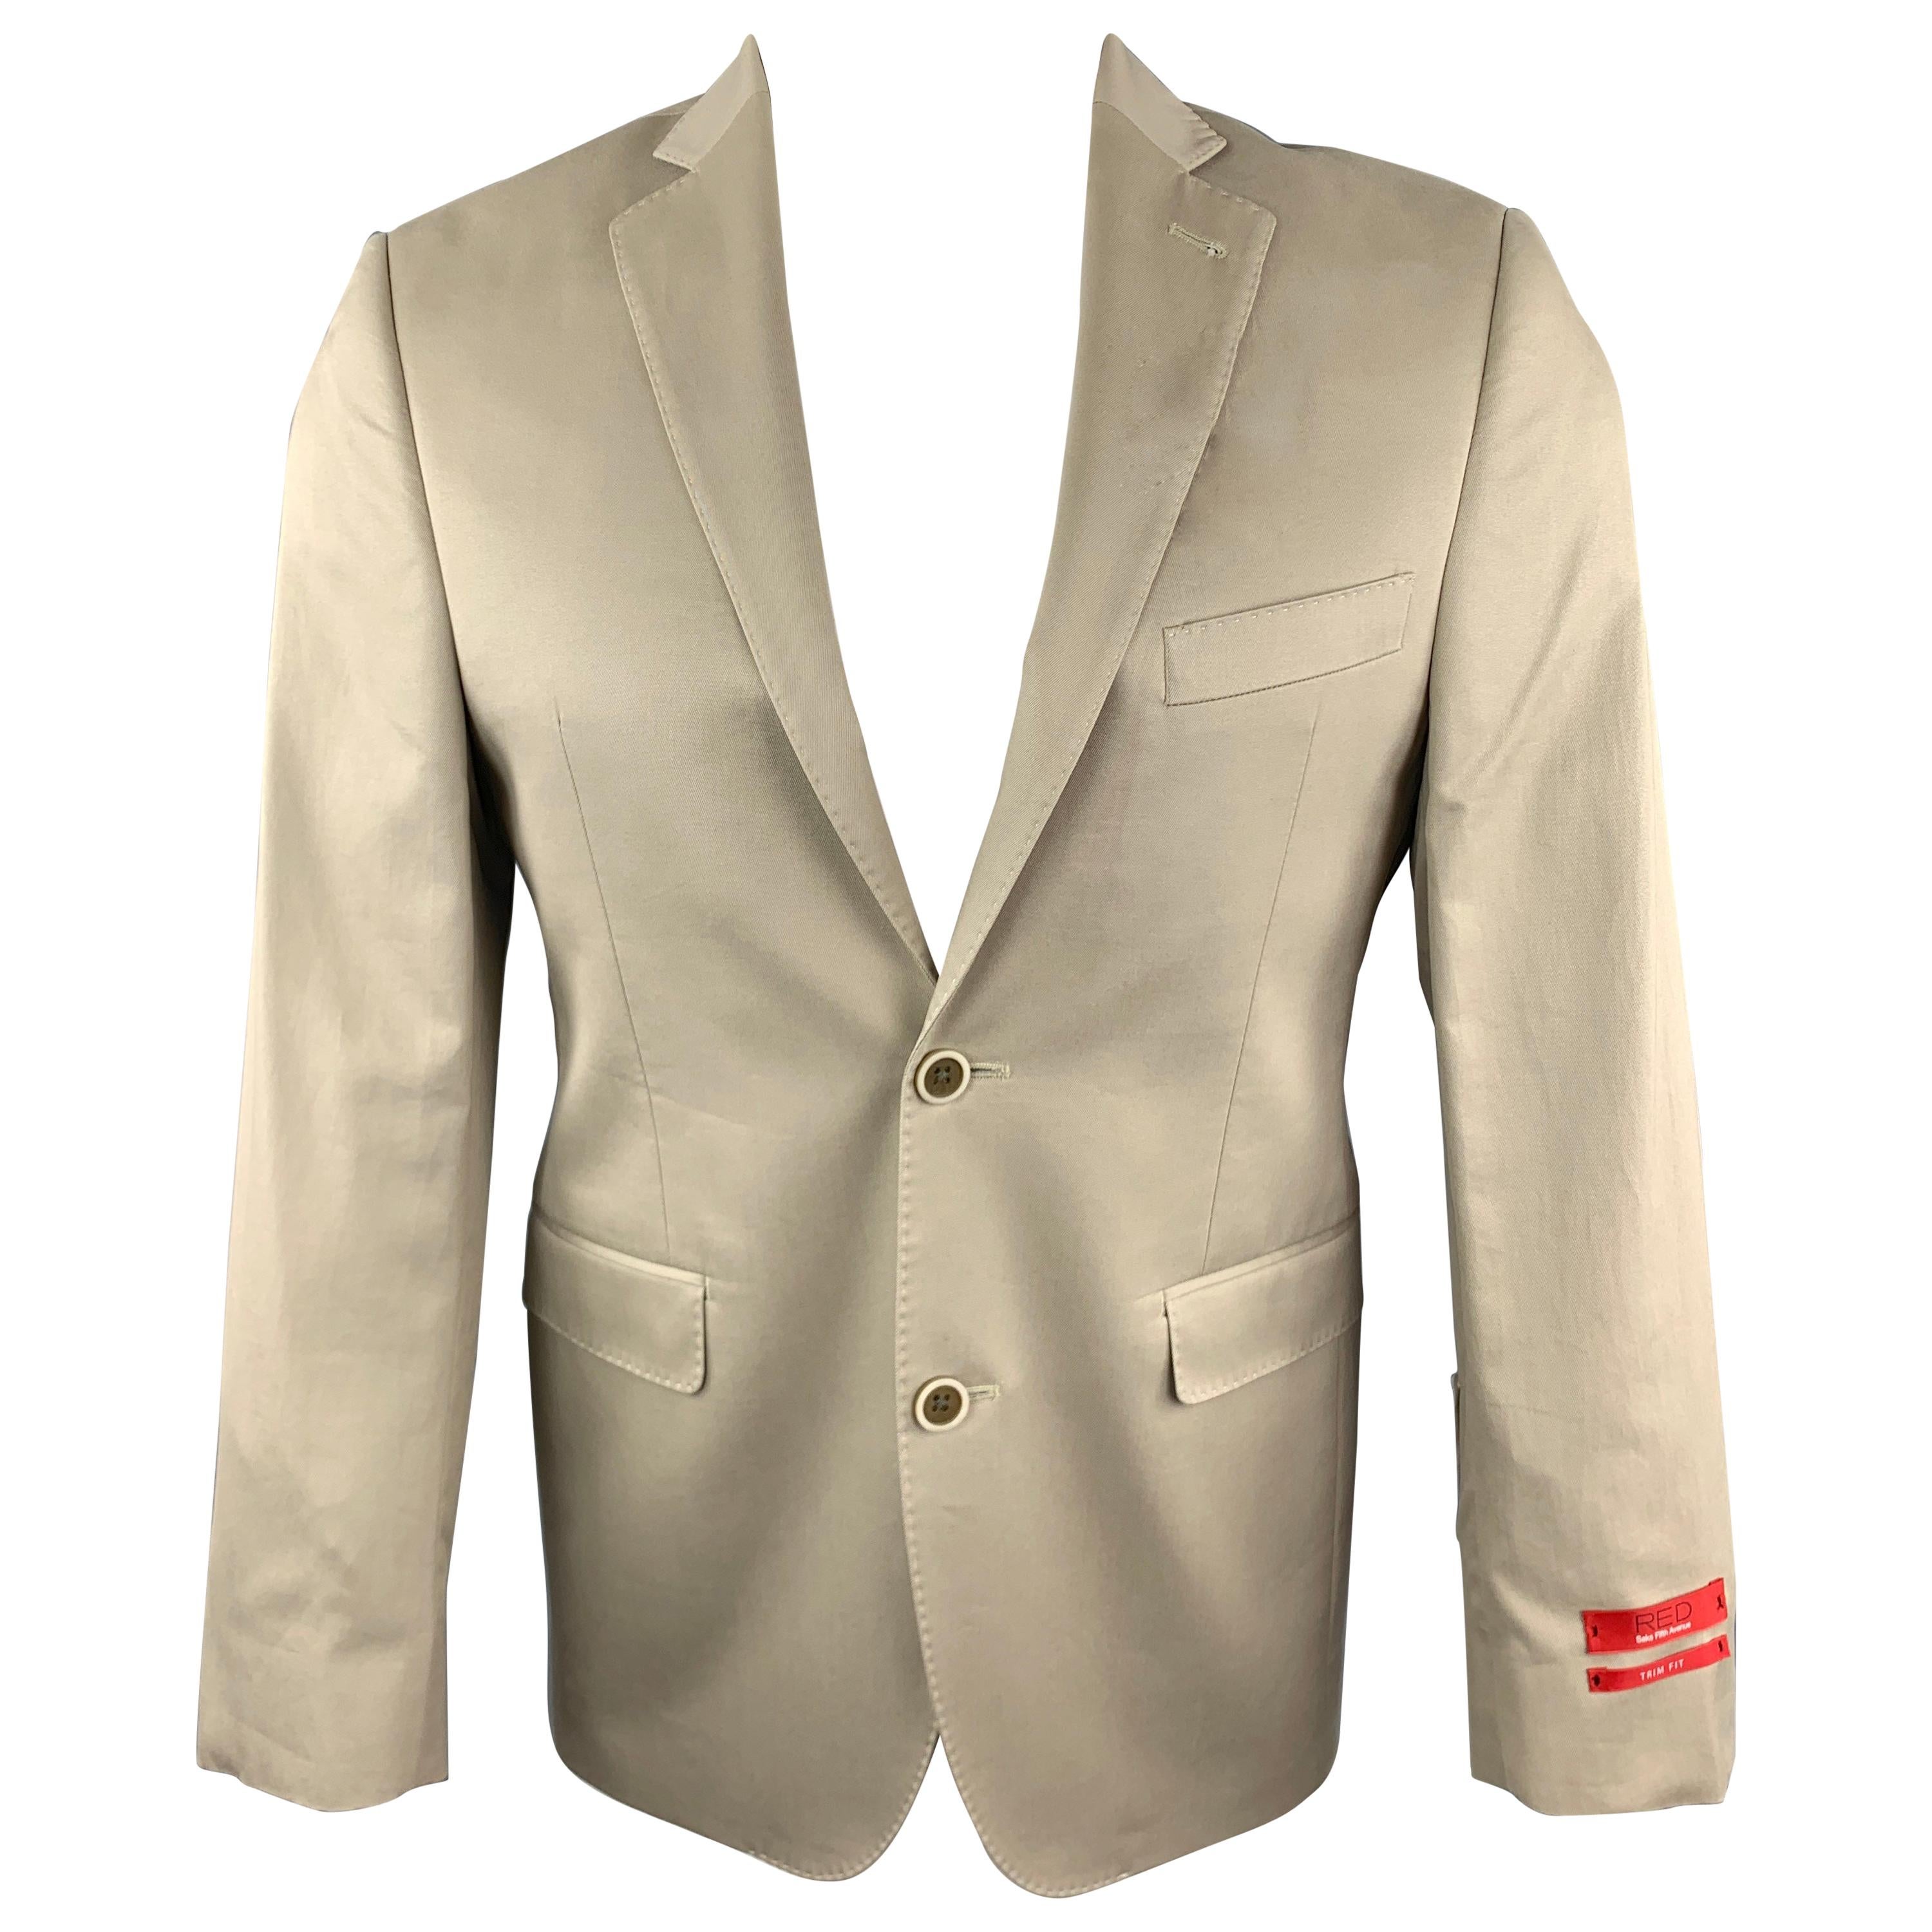 SAKS FIFTH AVENUE Size 36 Khaki Cotton Notch Lapel Sport Coat Jacket